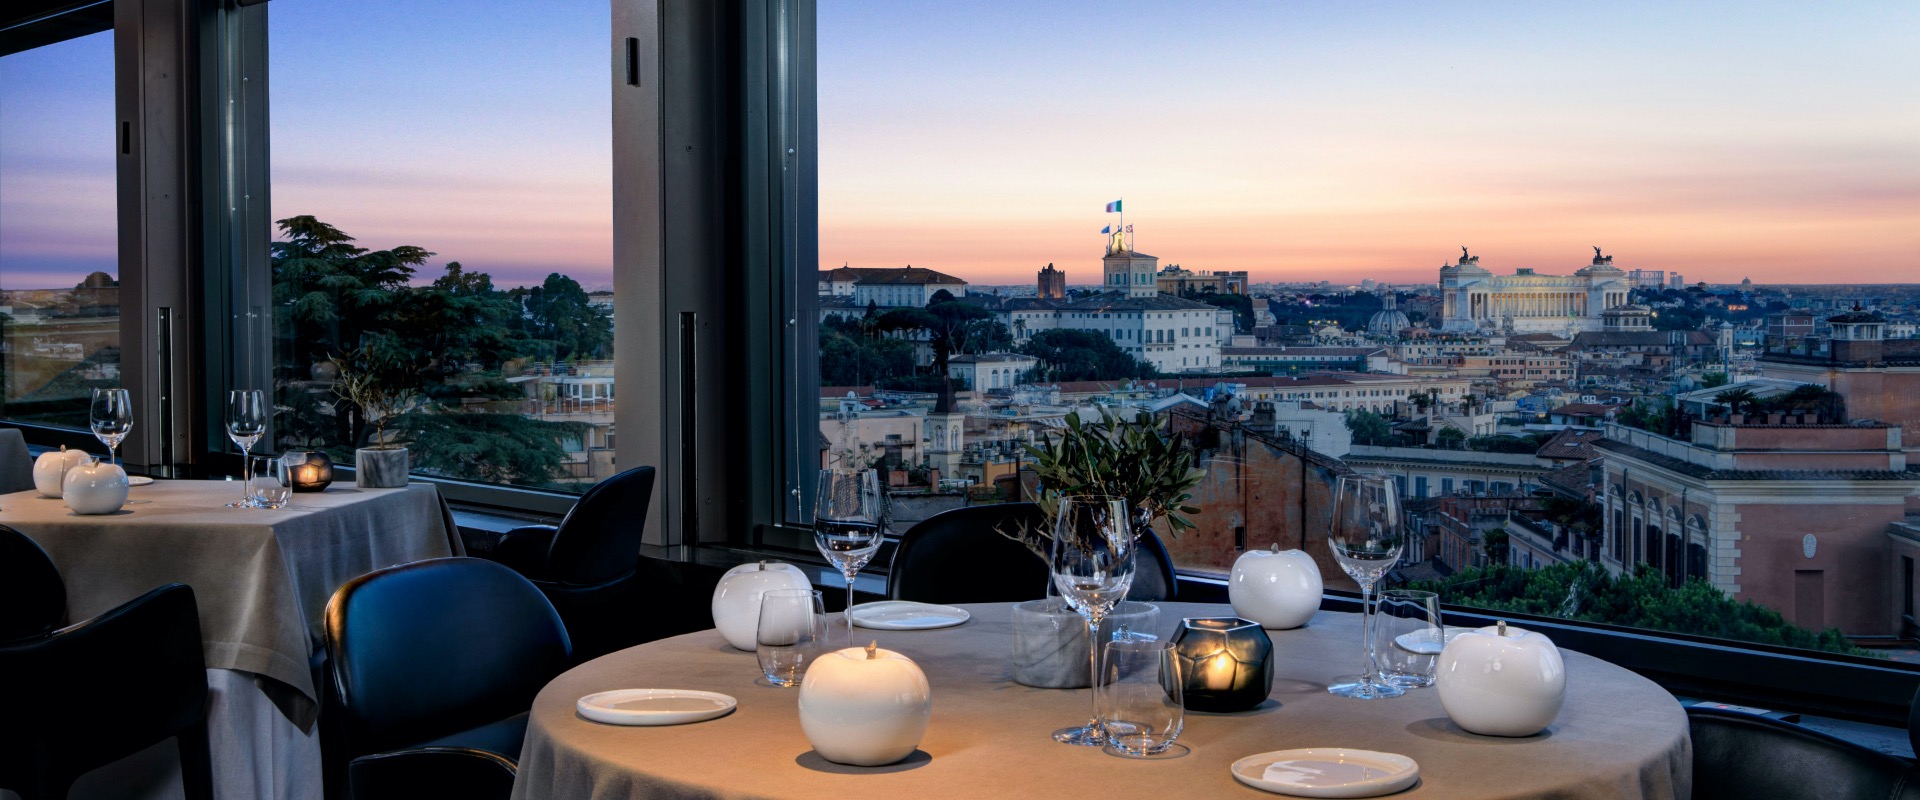 Top 10 Luxury Hotels in Rome